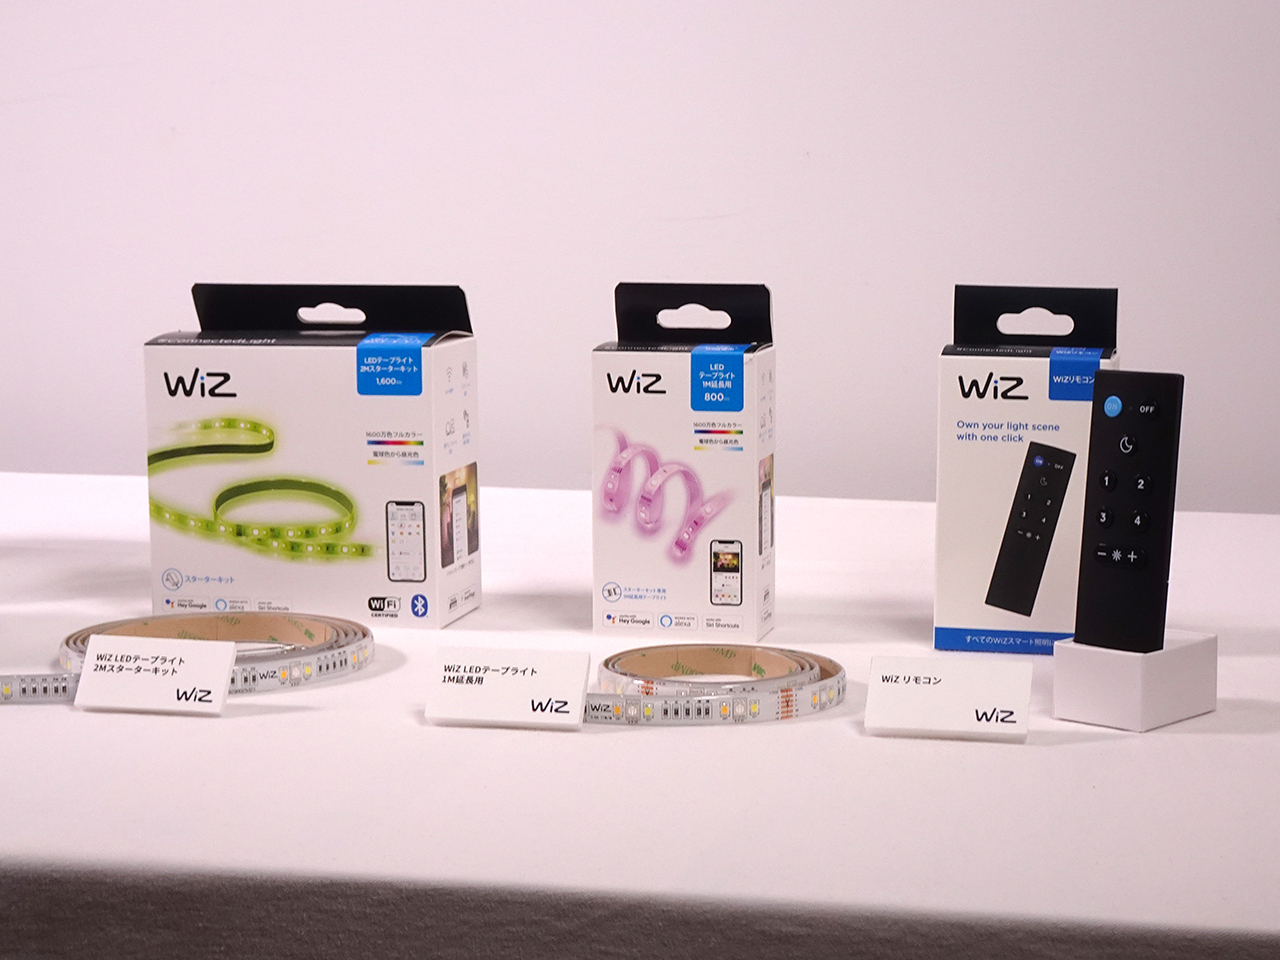 “WiZ LED Tape Light 2M Starter Kit” (left), “WiZ LED Tape Light 1M Extension” (center), “WiZ Remote Control” (right)